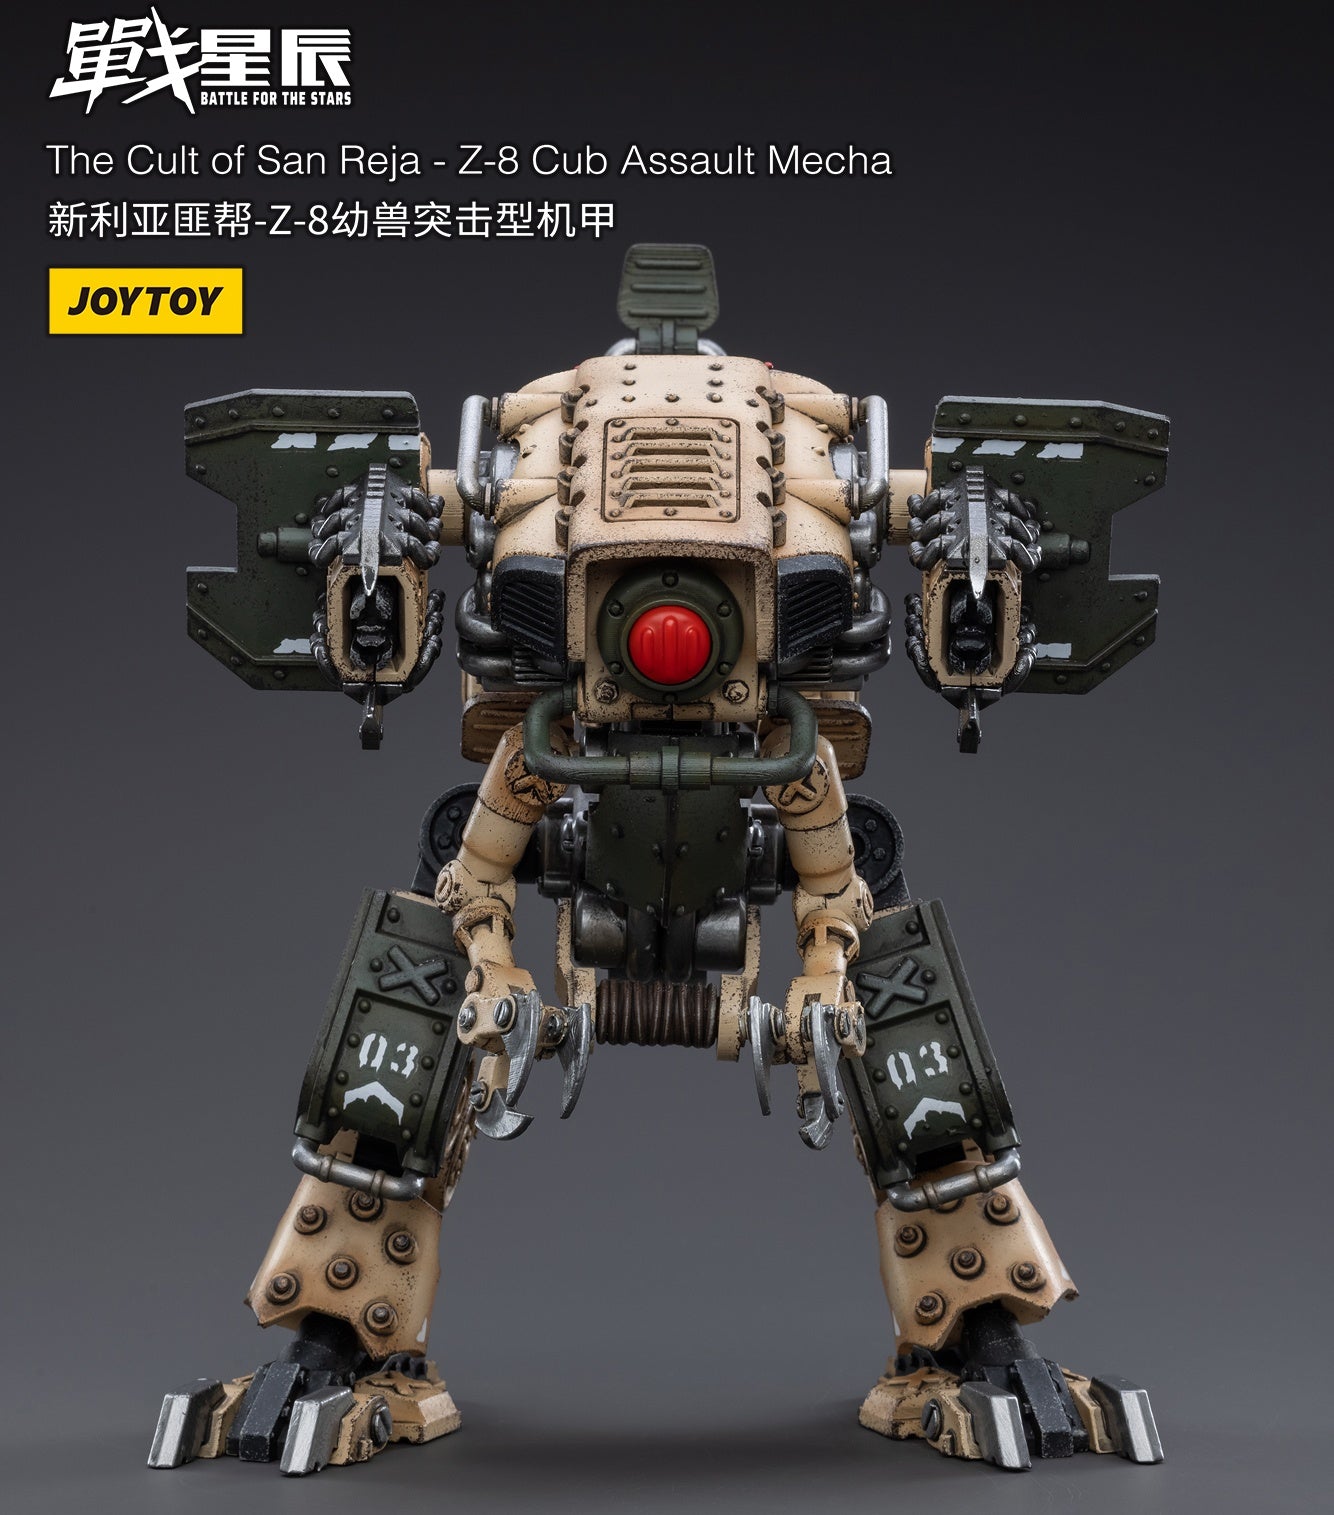 Joy Toy - Battle for the Stars - The Cult of San Reja - Z-8 Cub Assault Mech (1/18 Scale) - Marvelous Toys